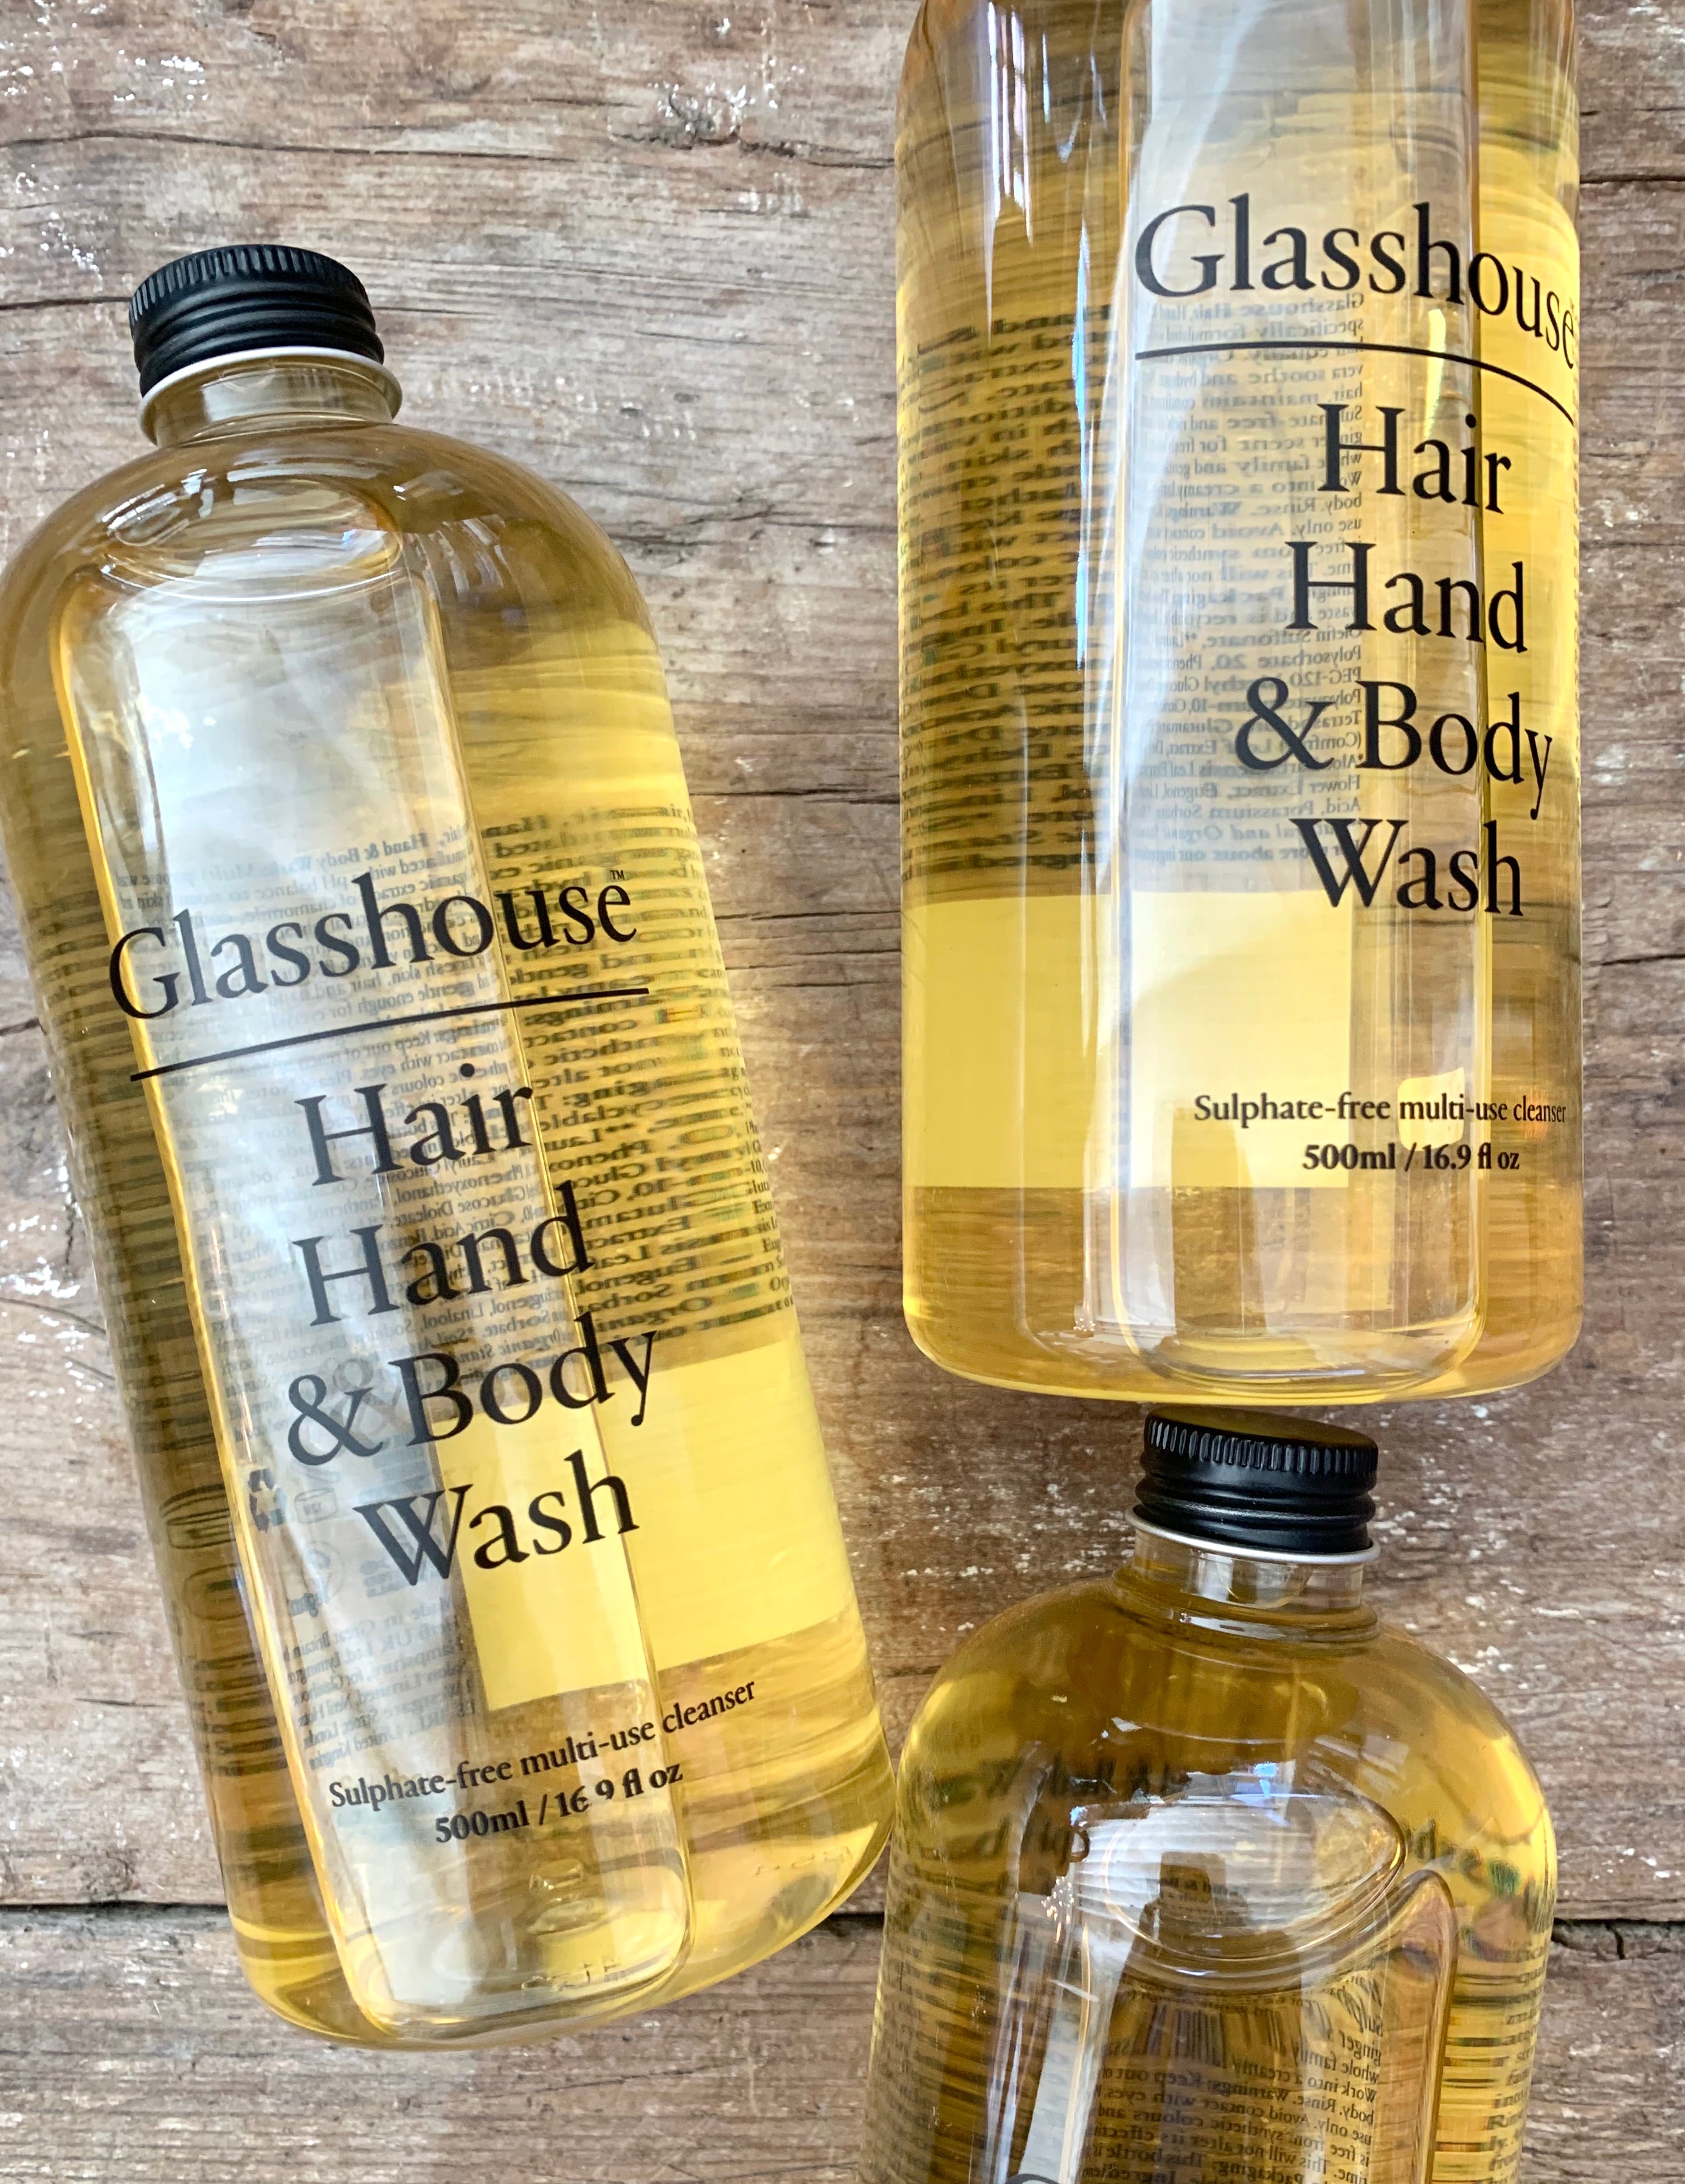 Glasshouse Hair Hand & Body Wash